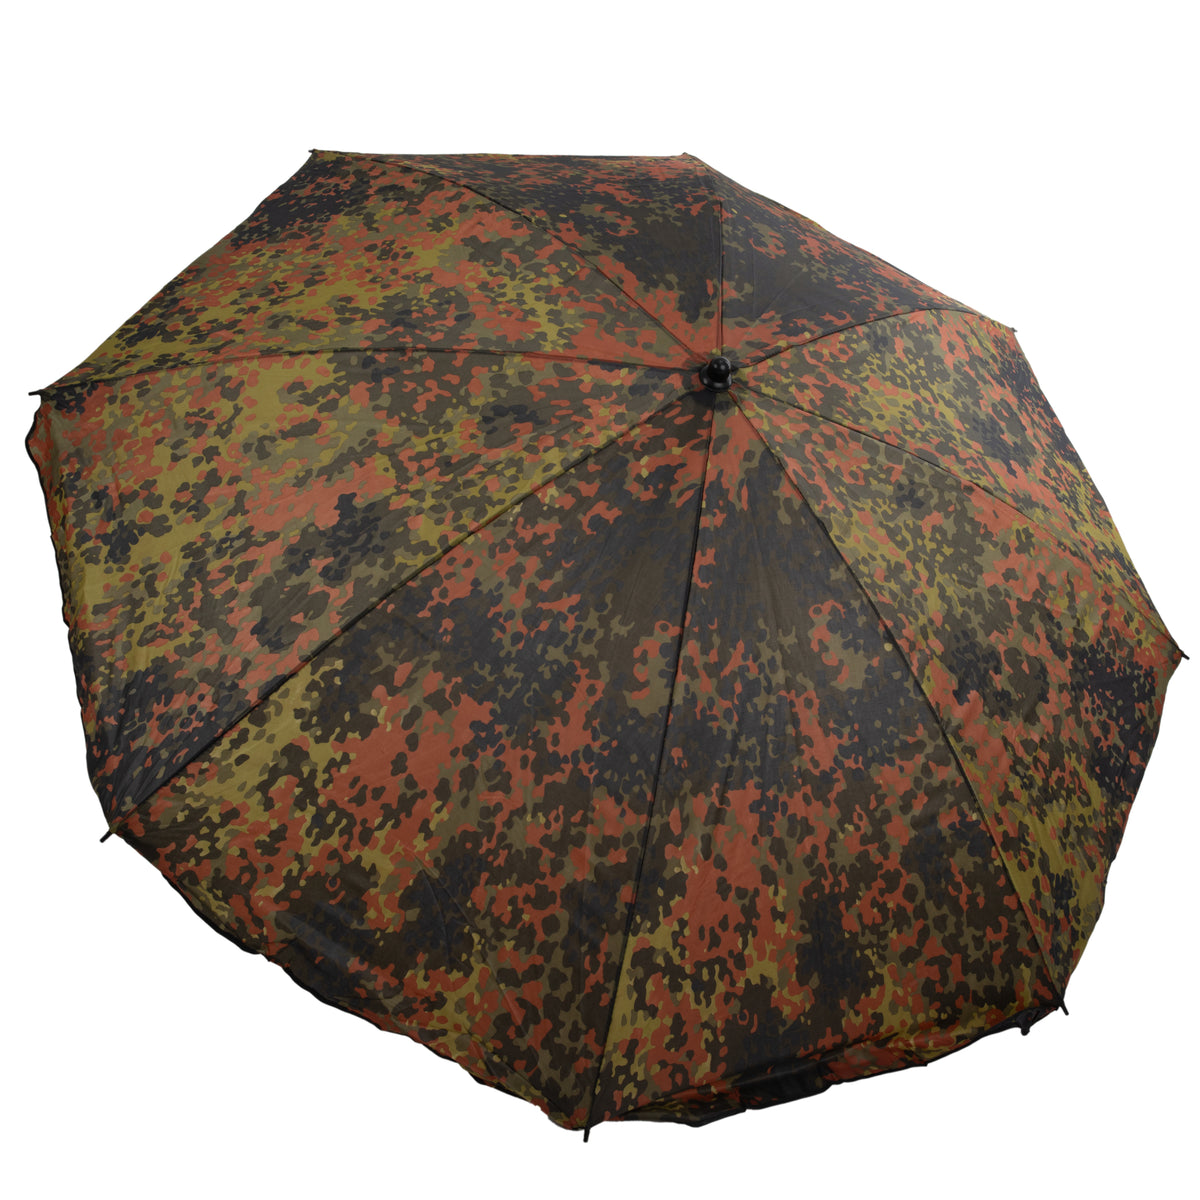 German Military Style 6' Patio Umbrella